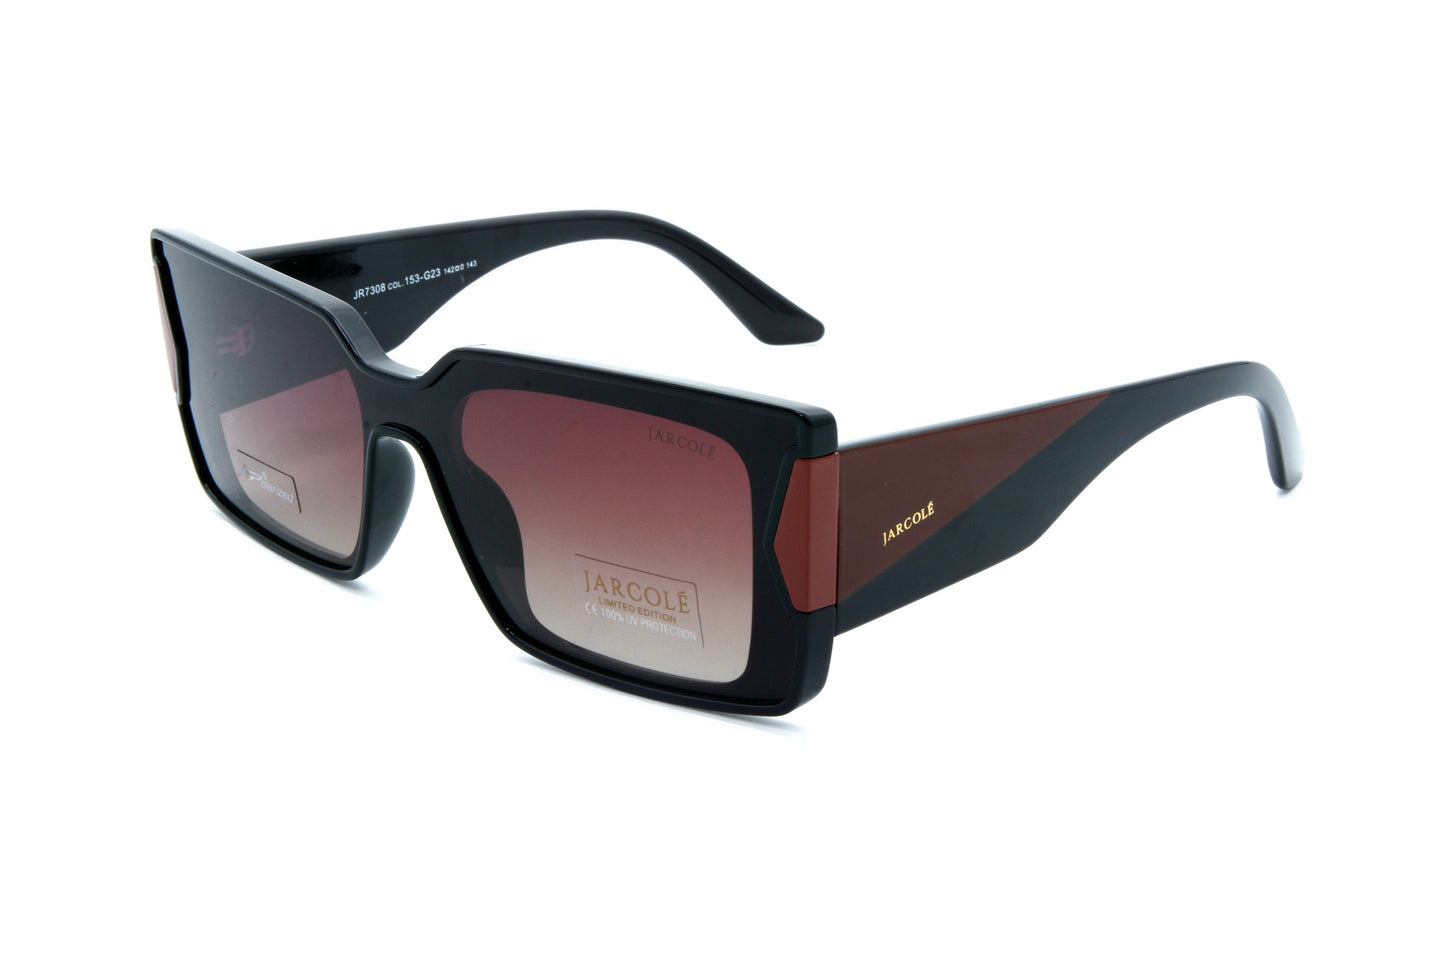 Jarcole sunglasses JR7308 153-G23